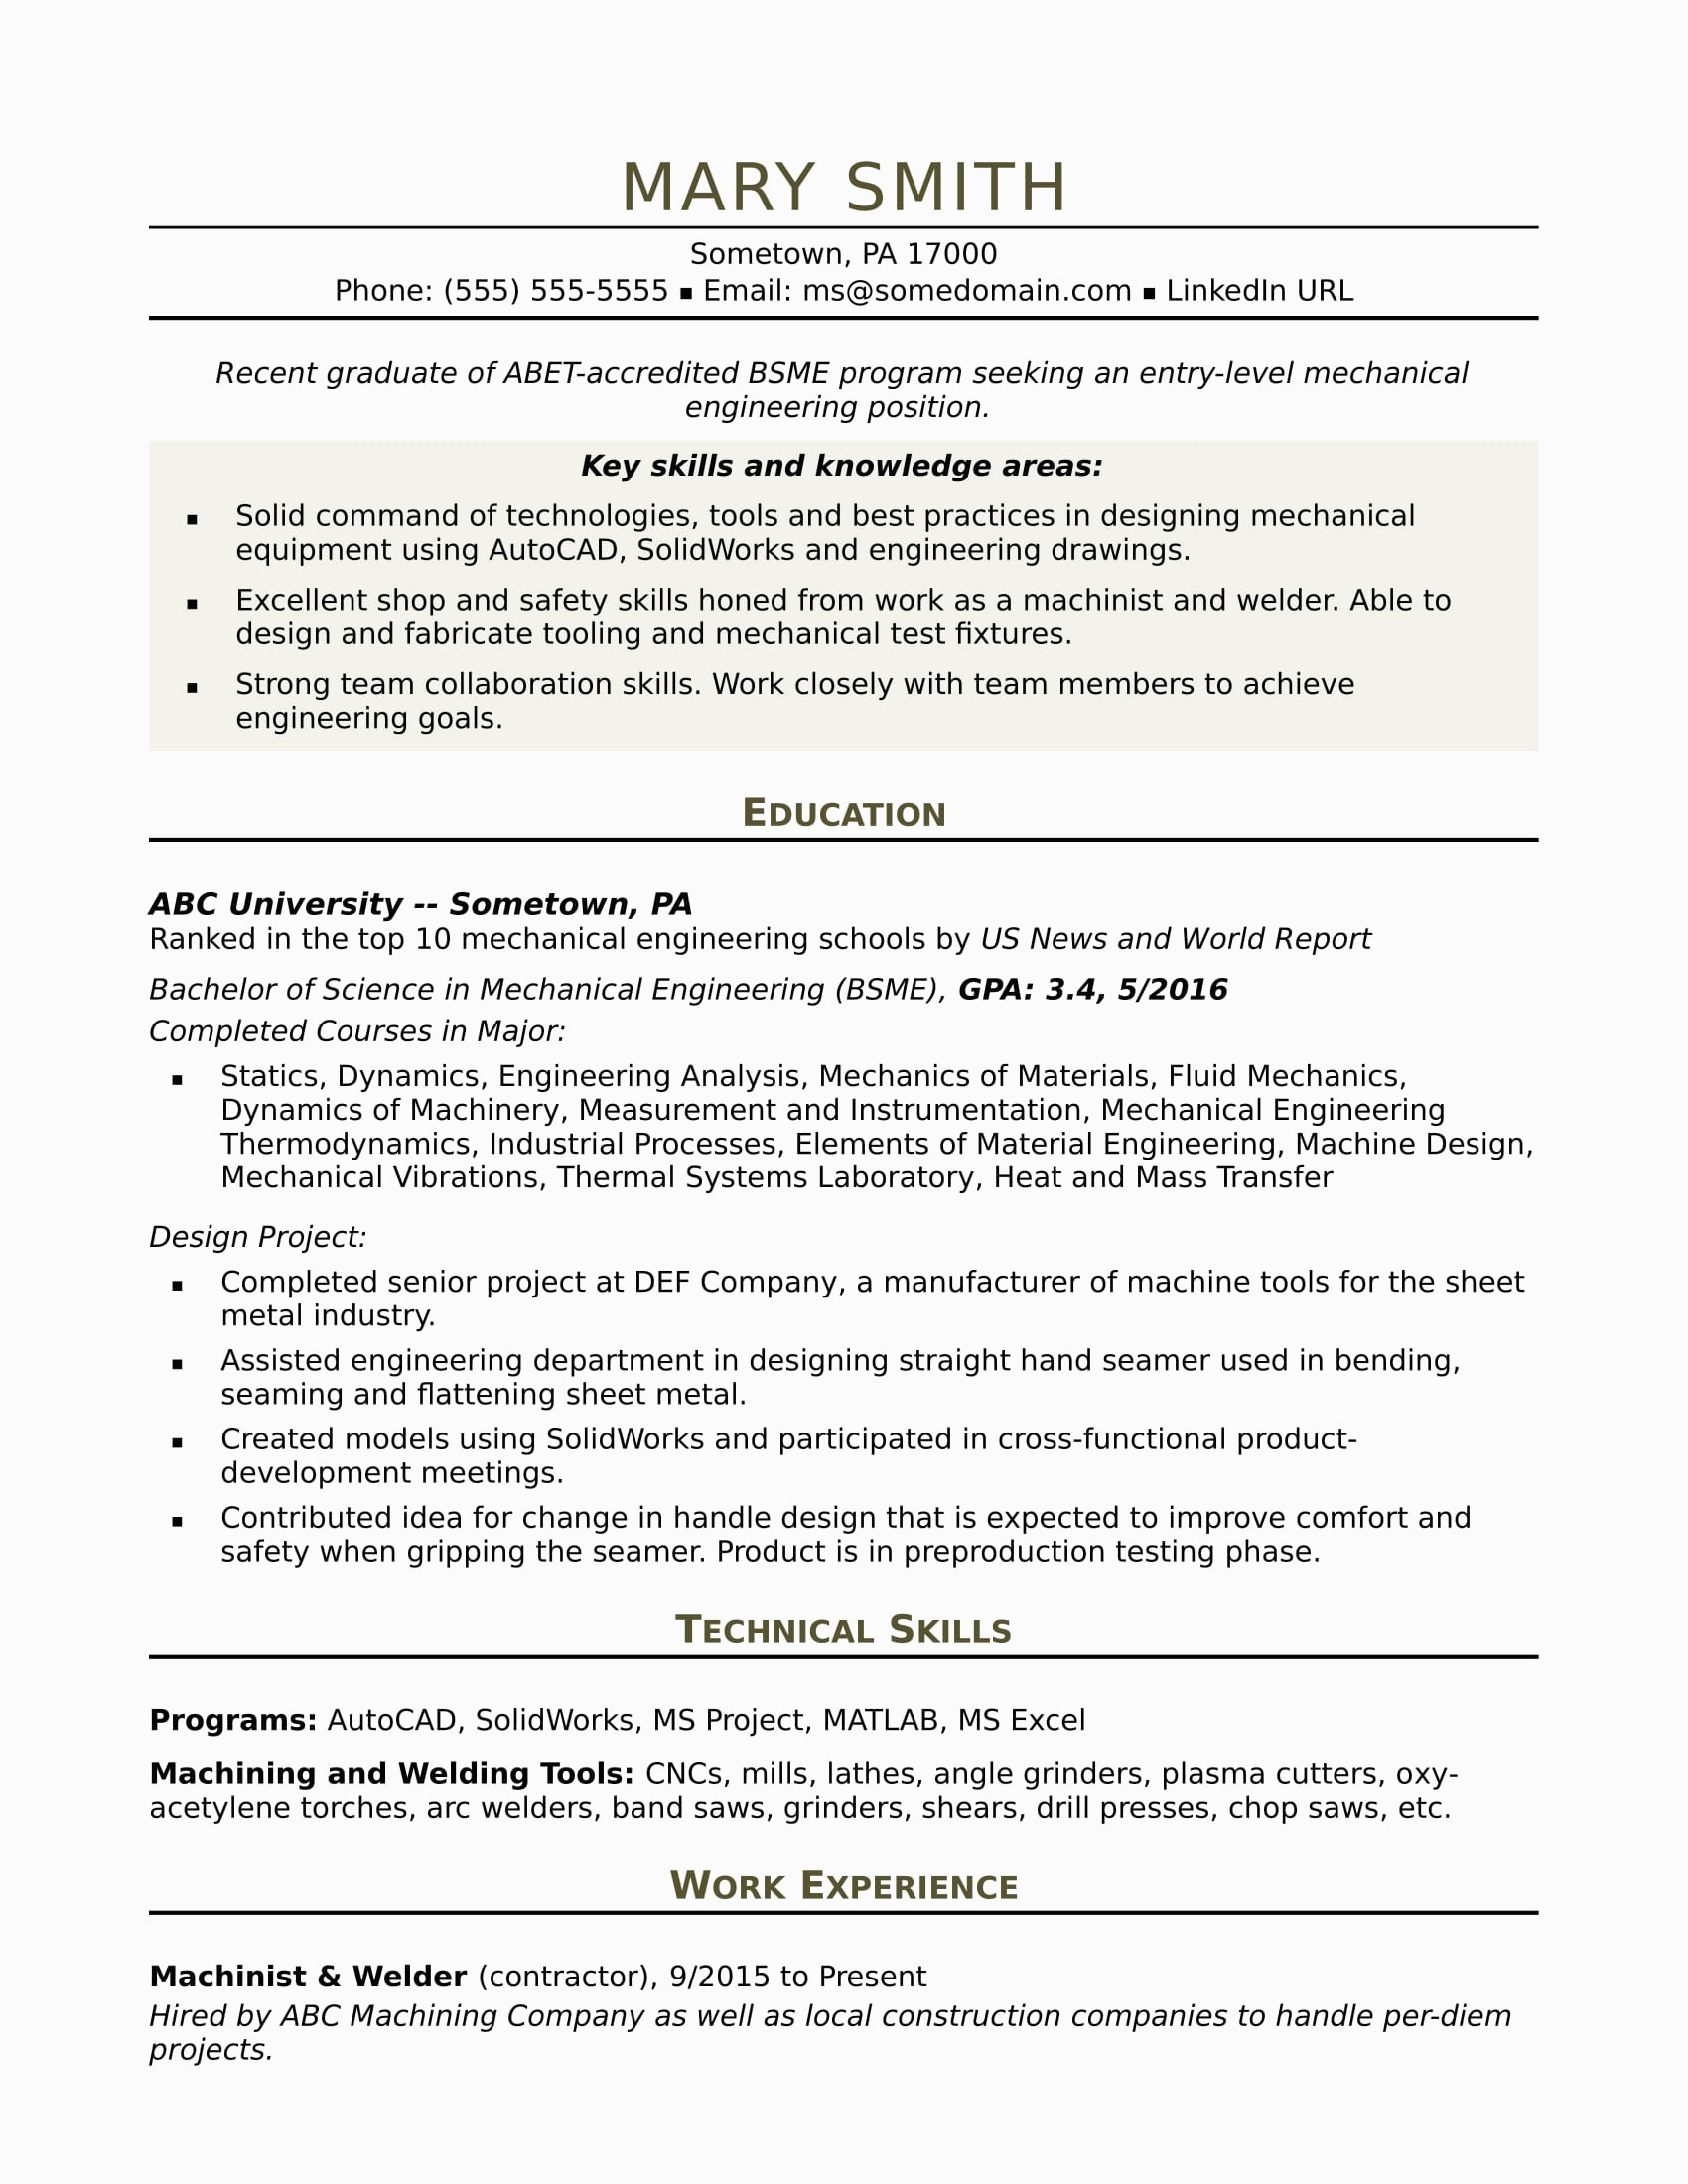 Sample Resume for Mechanical Engineer Professional Sample Resume for An Entry Level Mechanical Engineer